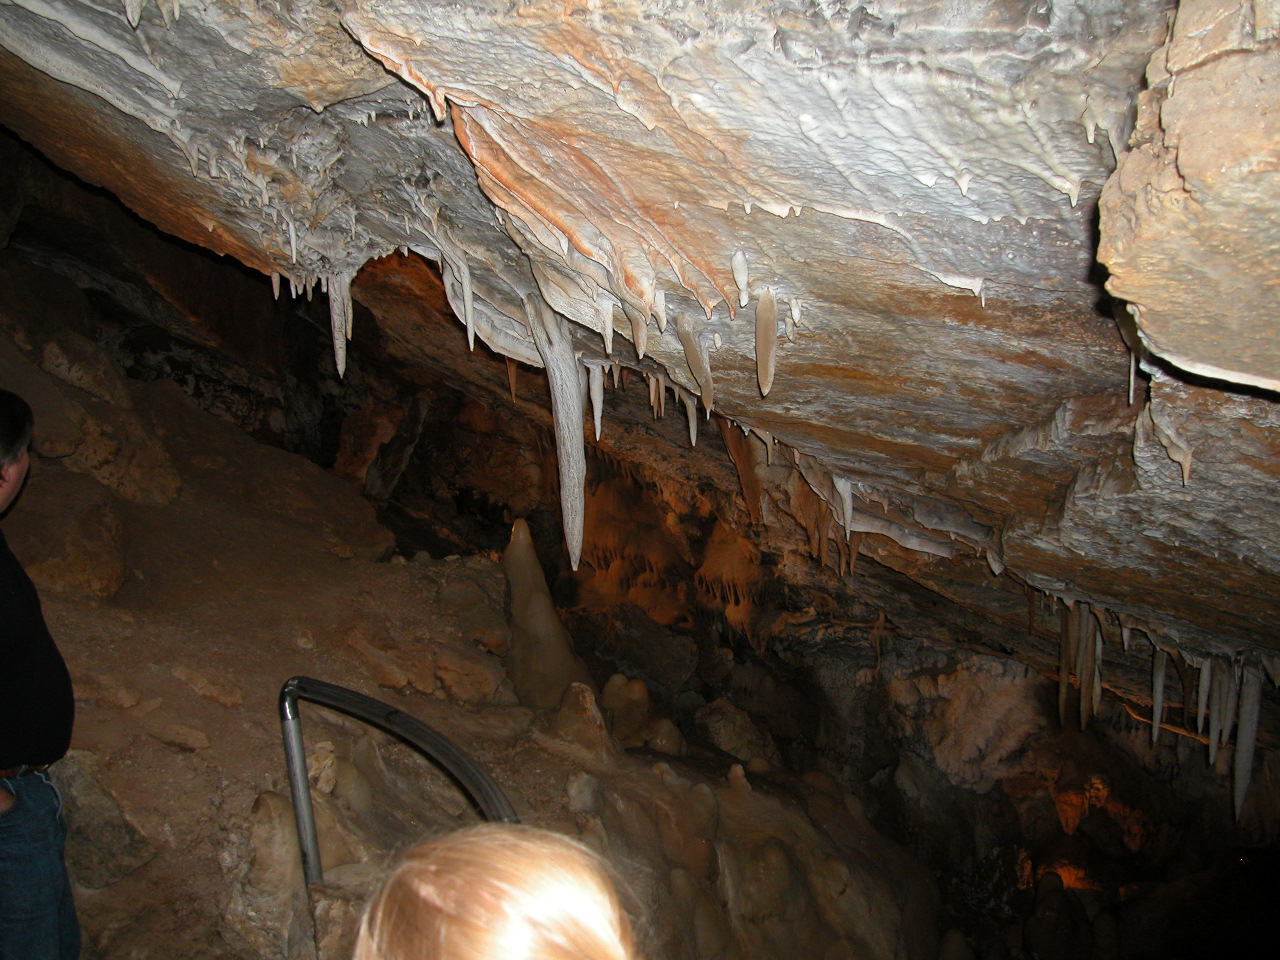 Glenwood Caverns Stalagtites